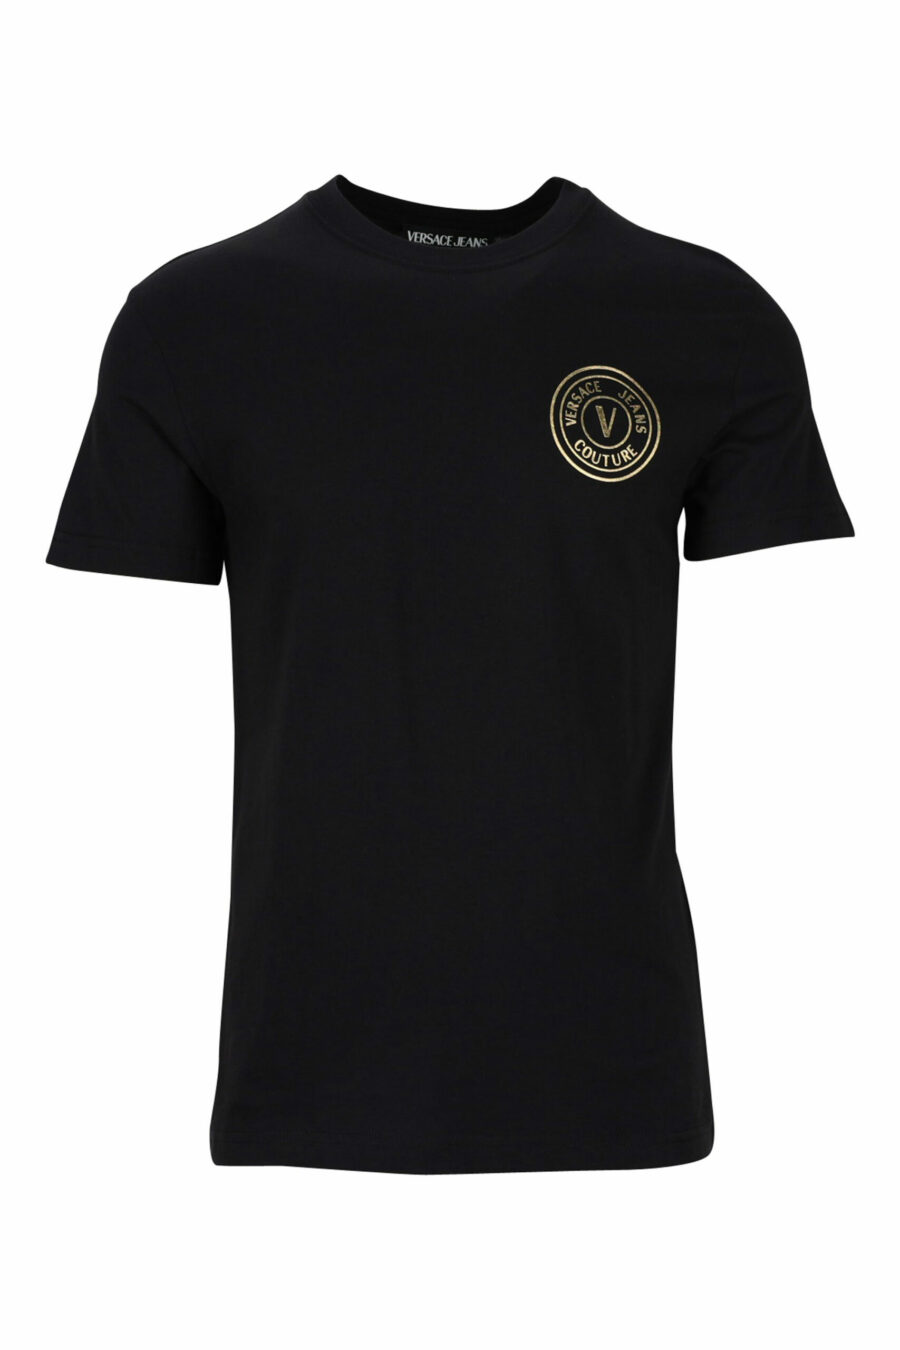 T-shirt preta com mini-logotipo circular dourado - 8052019468465 scaled